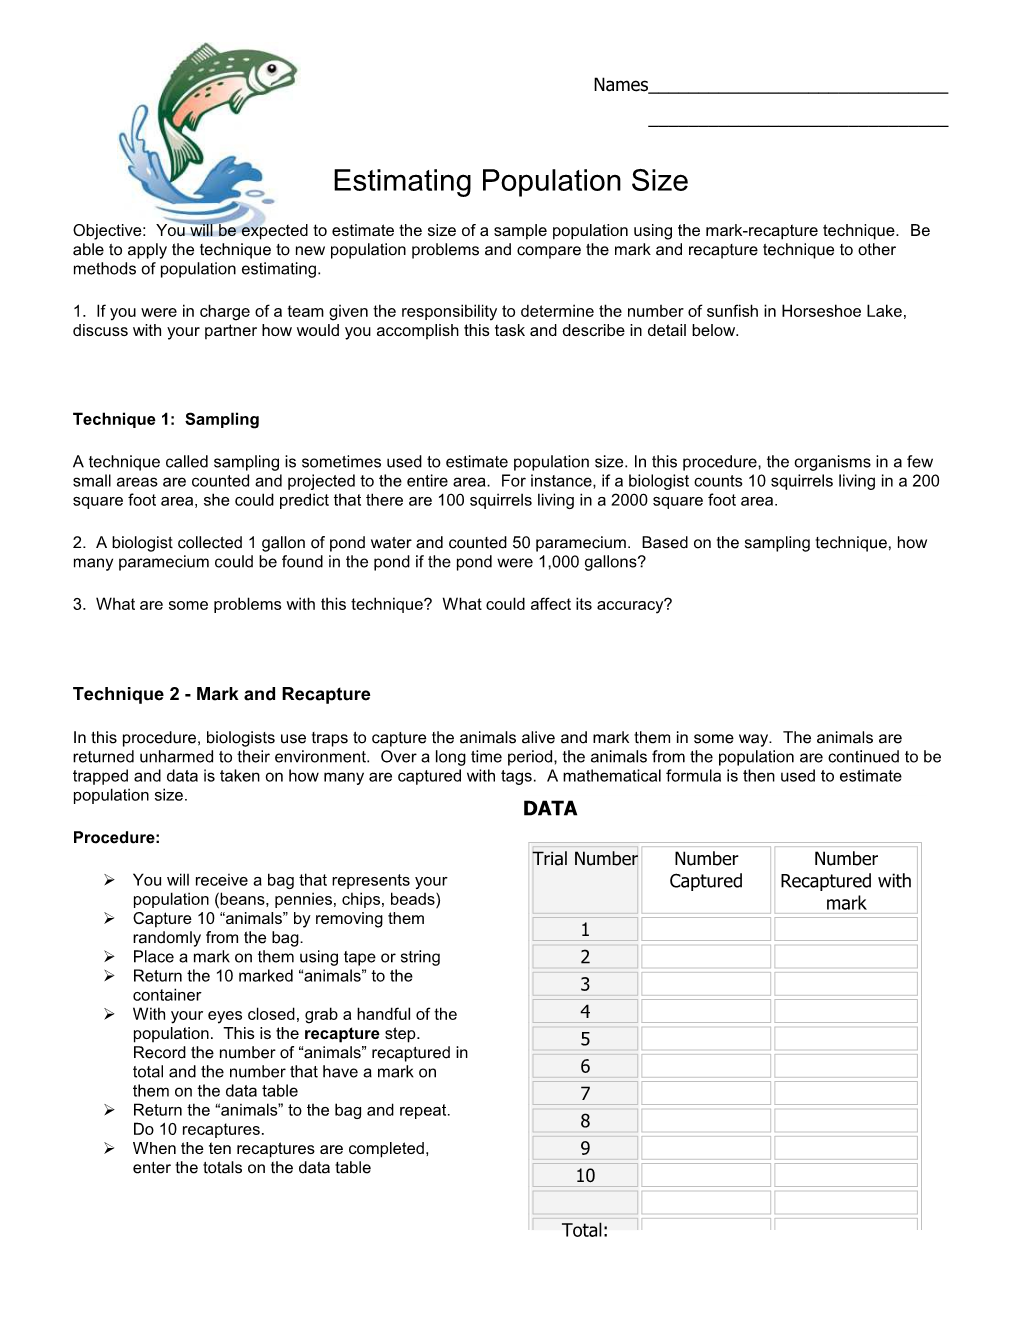 Estimating Population Size